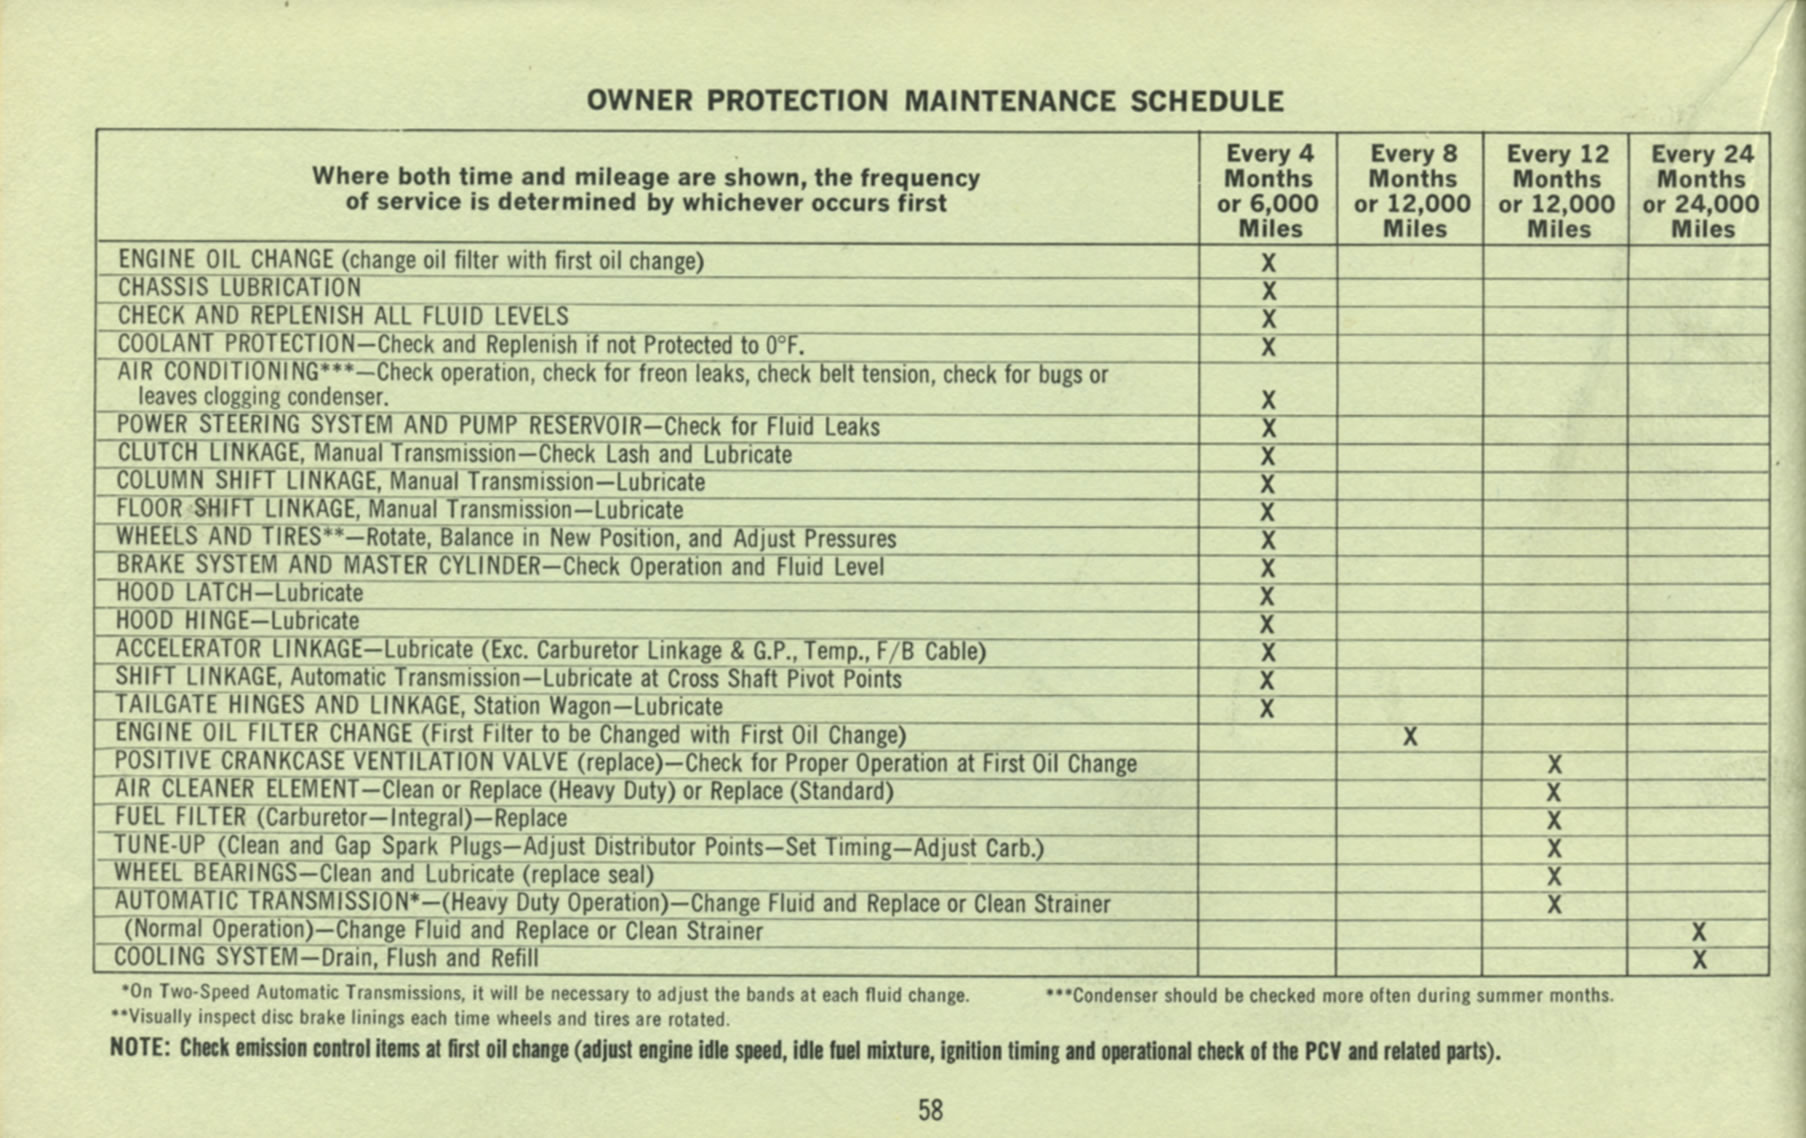 1969 Pontiac Owners Manual-58